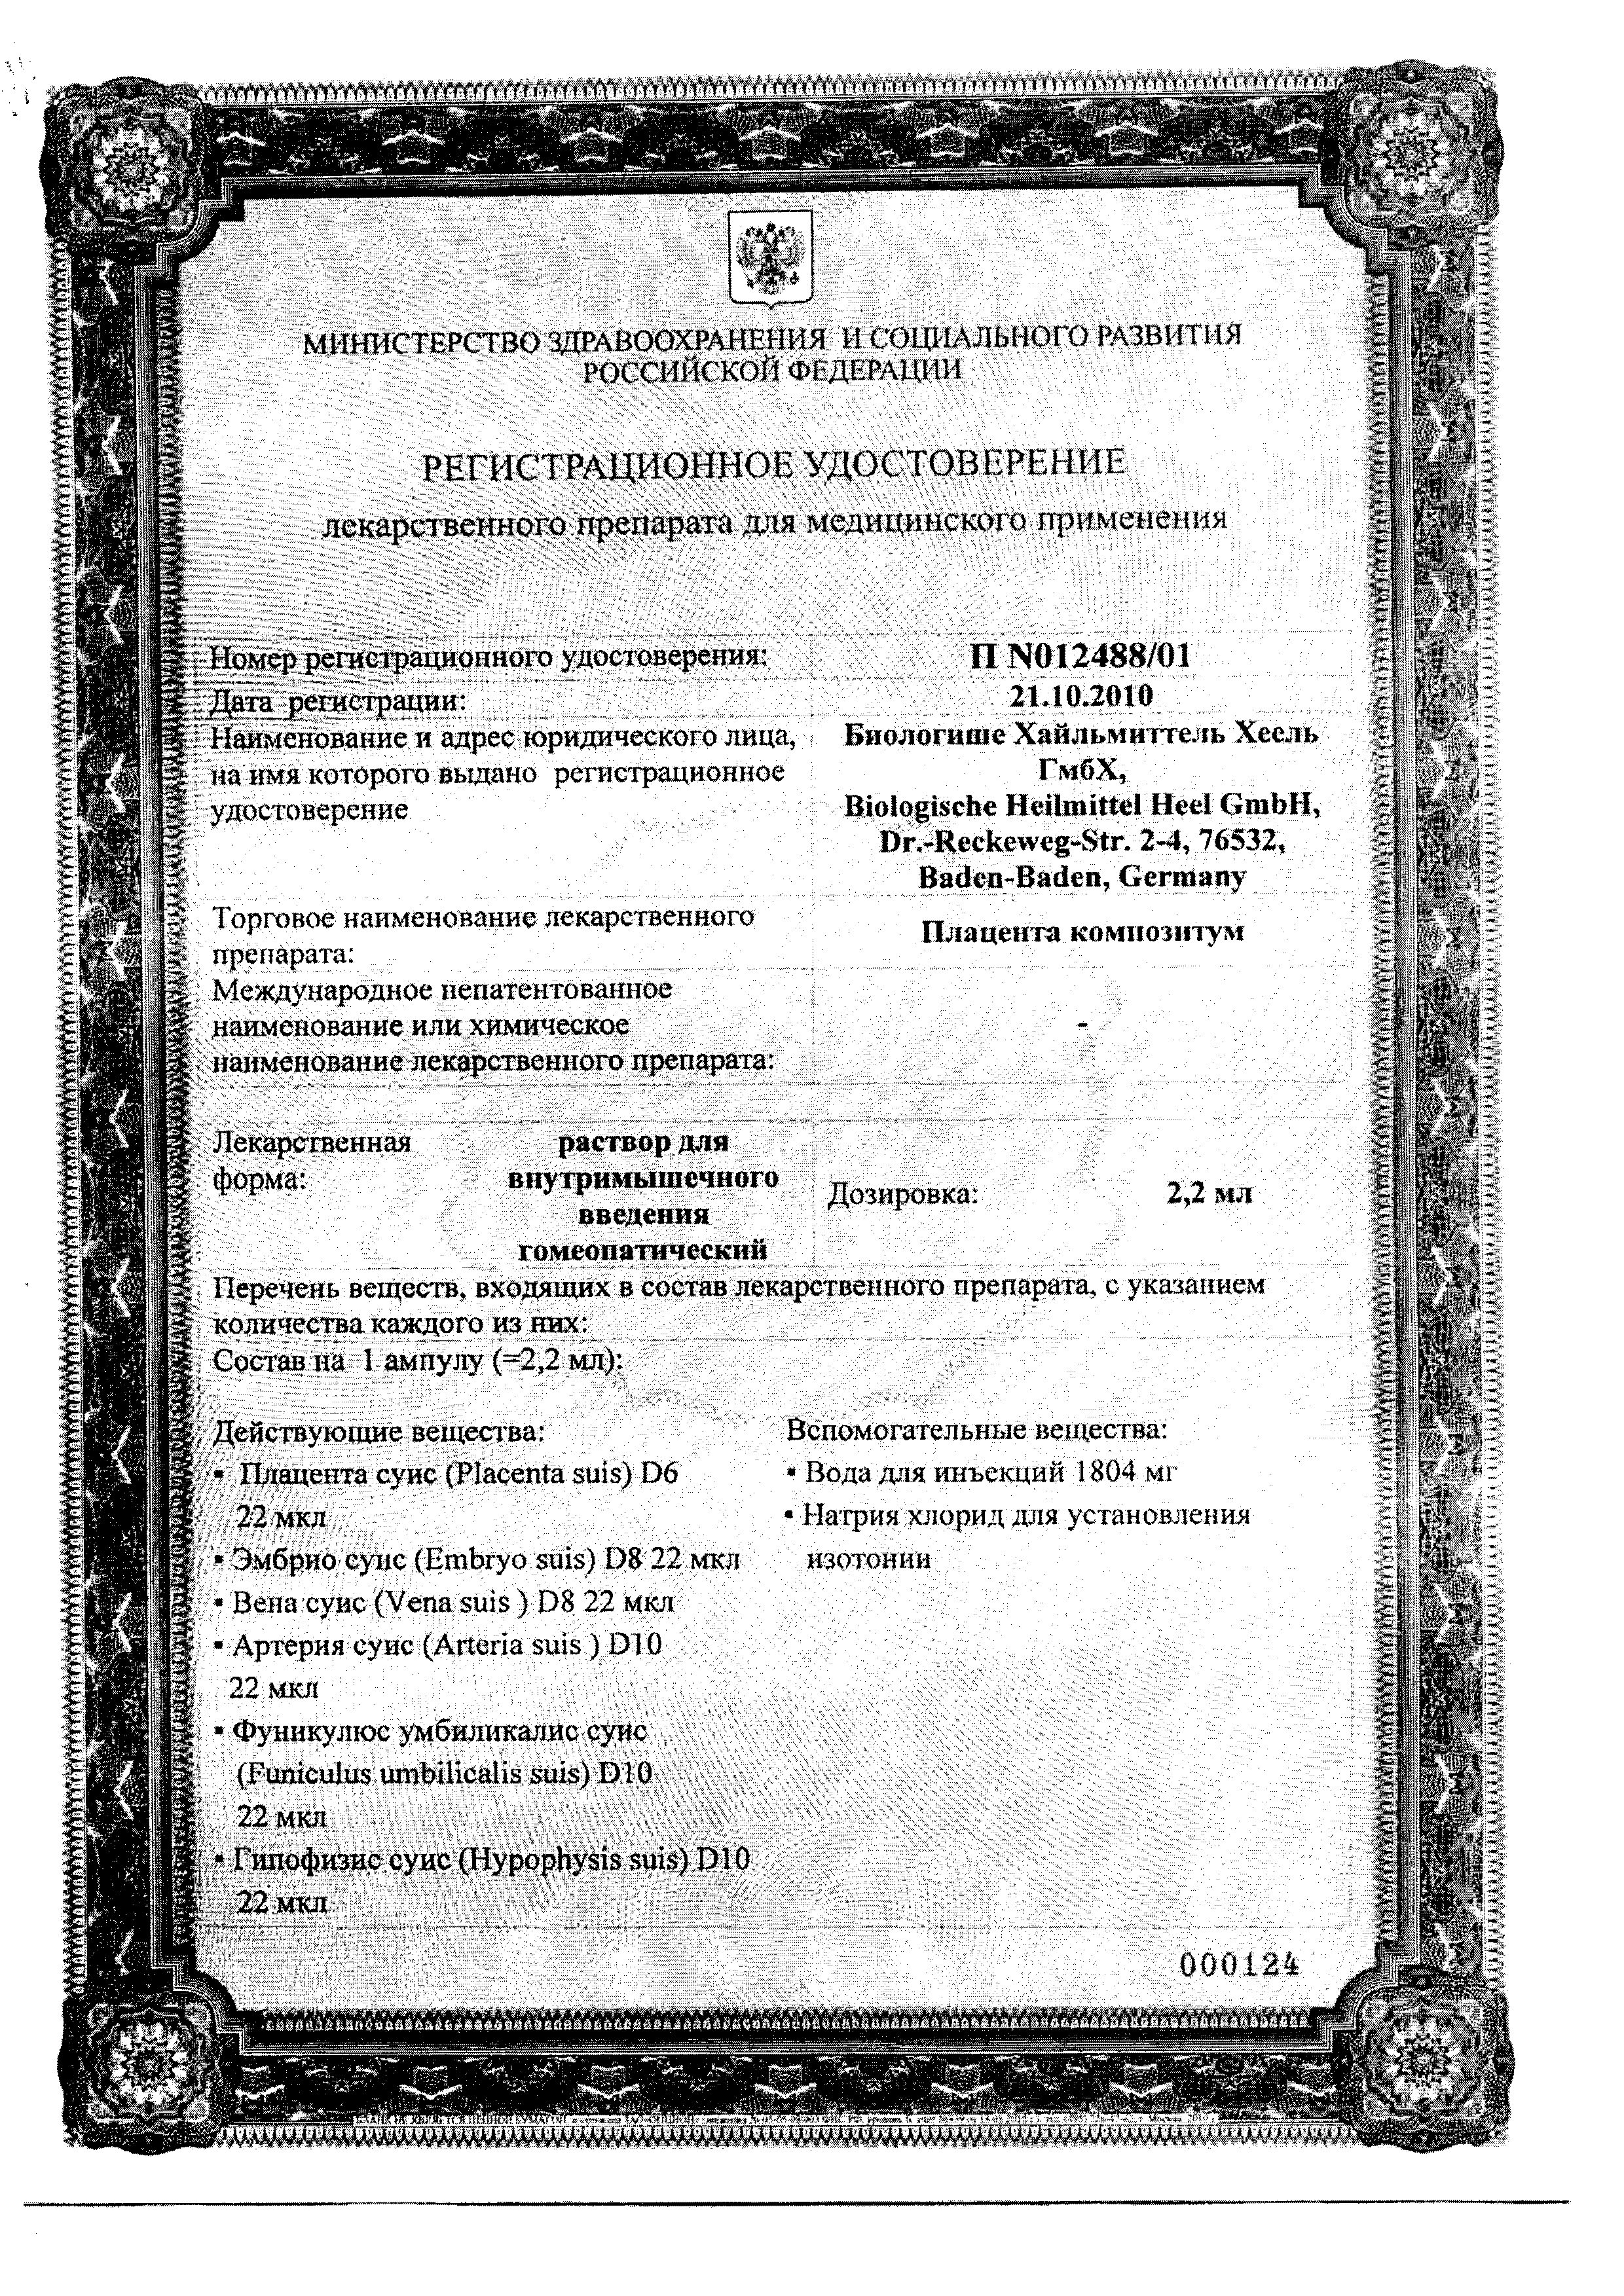 Плацента композитум сертификат